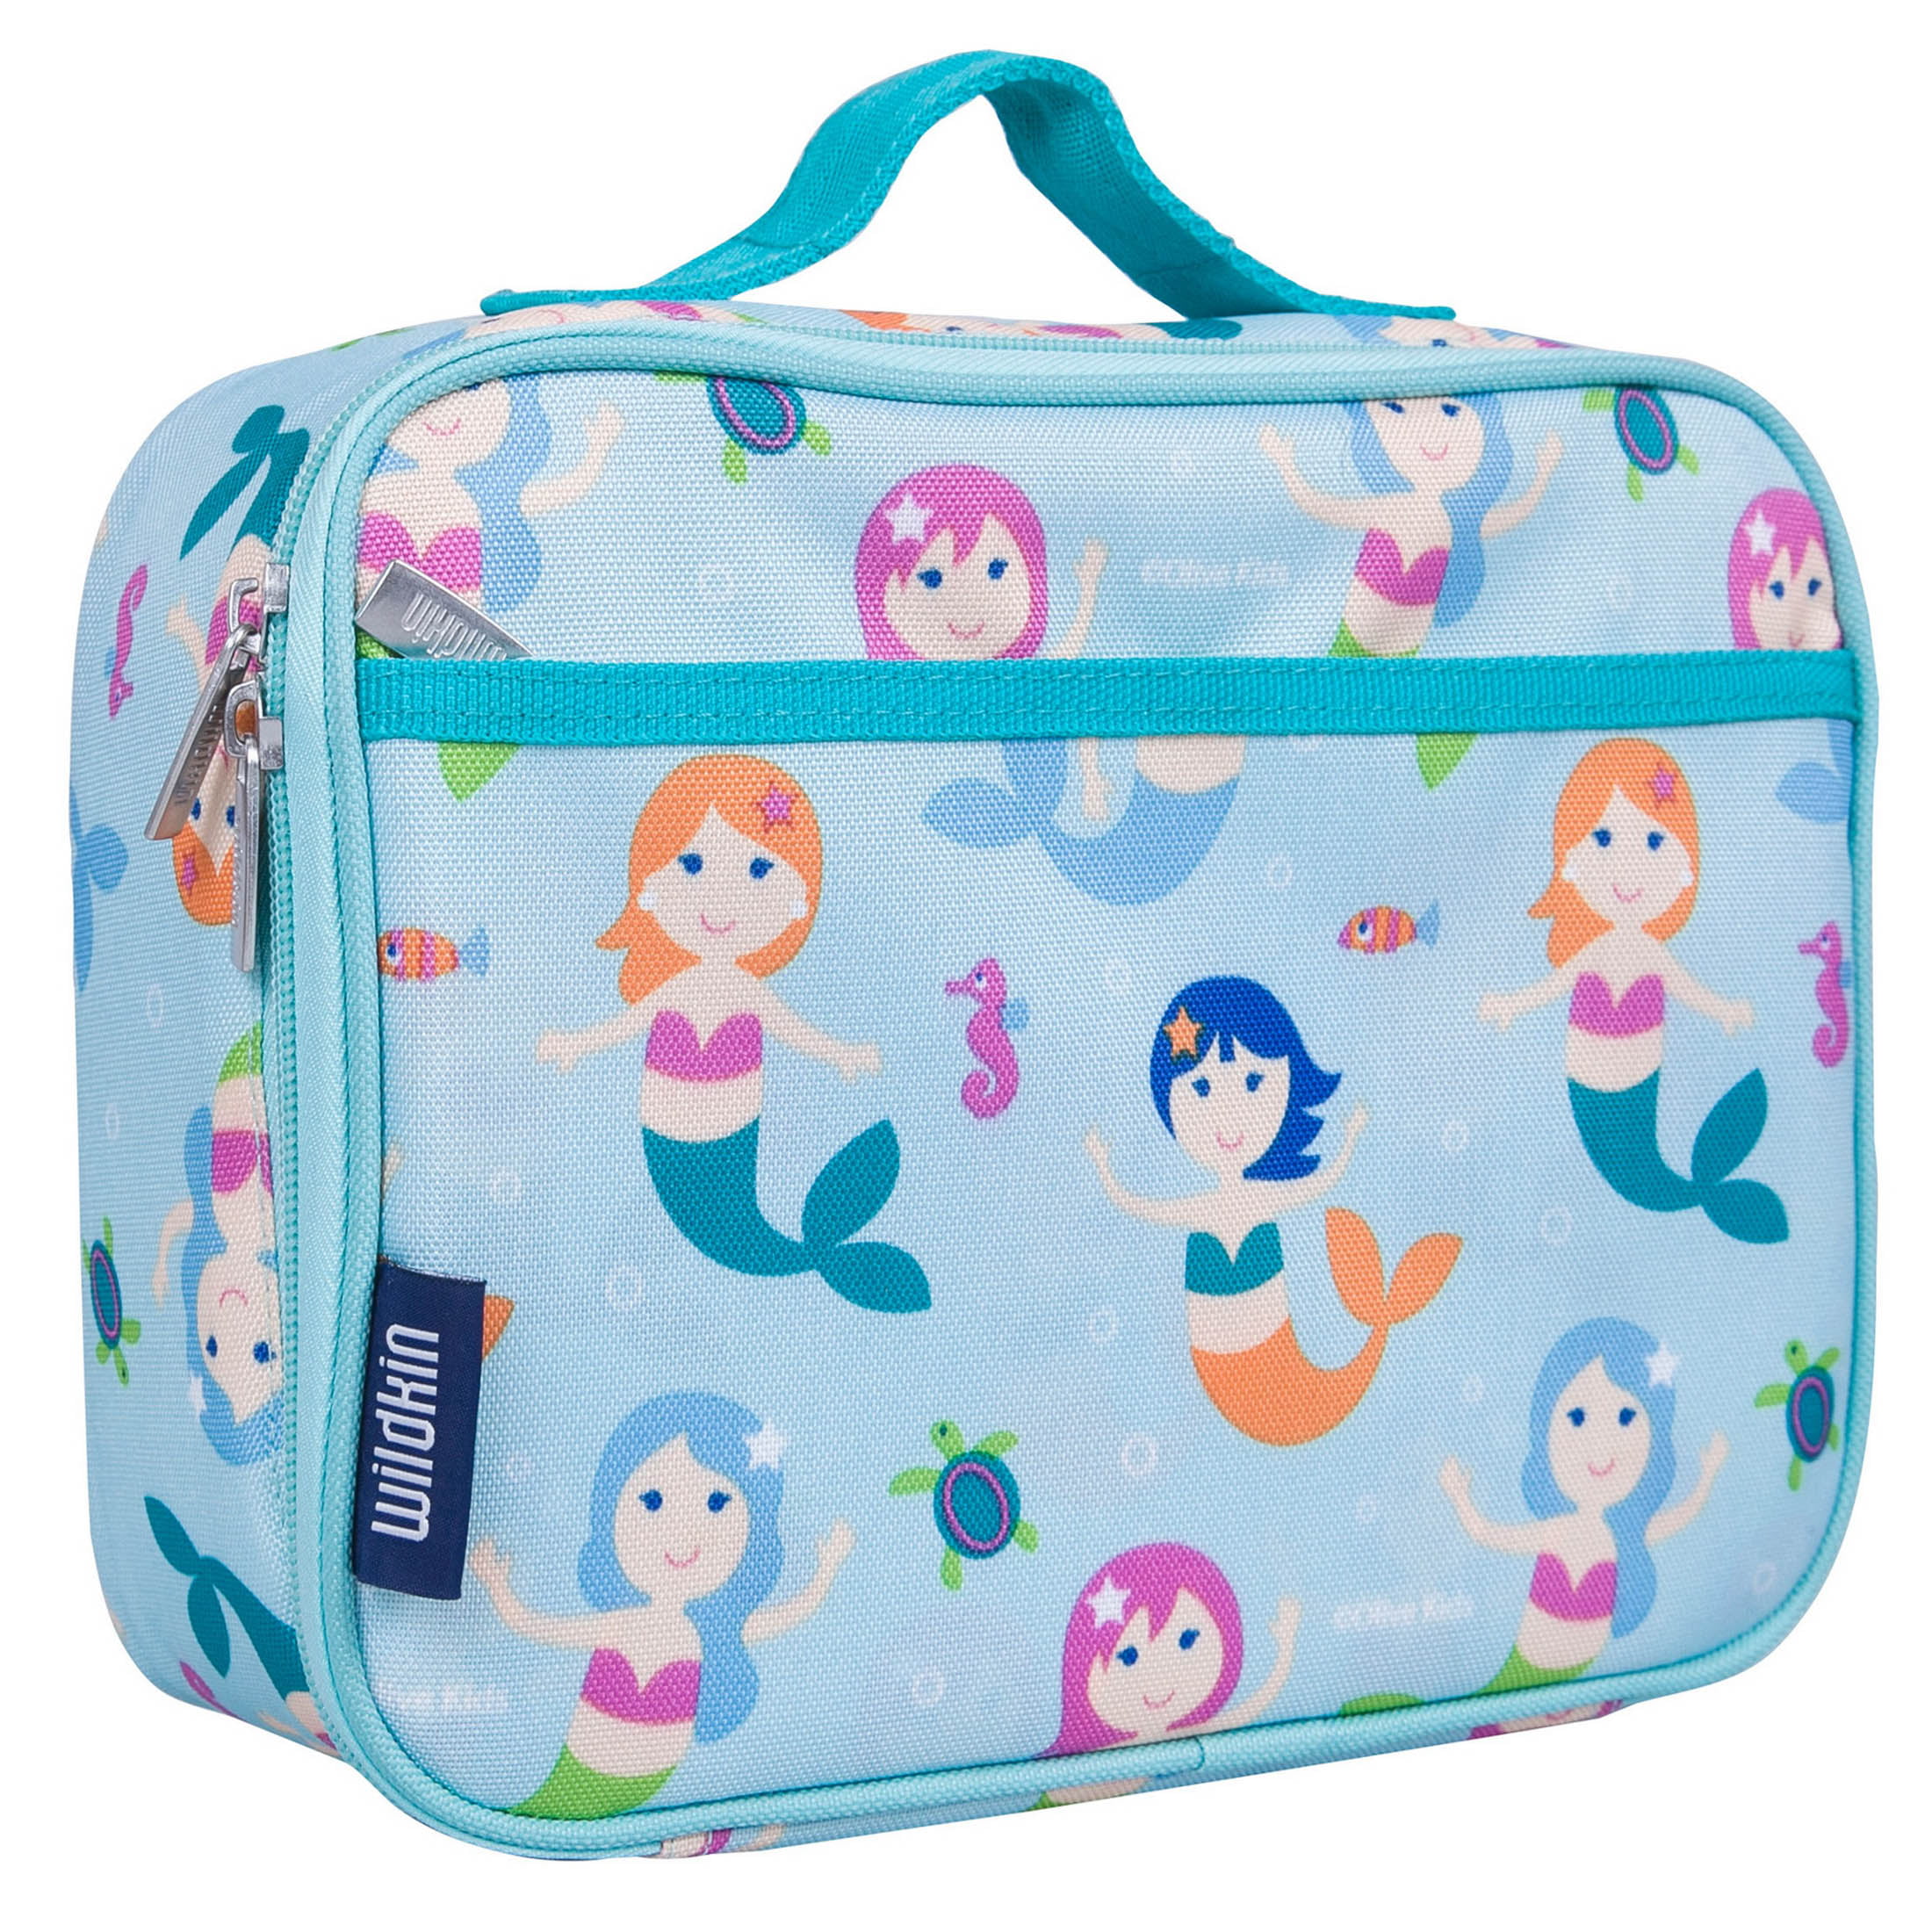 Wildkin Kids Insulated Lunch Box for Boy and Girls, BPA Free (Mermaids Blue)  - Walmart.com